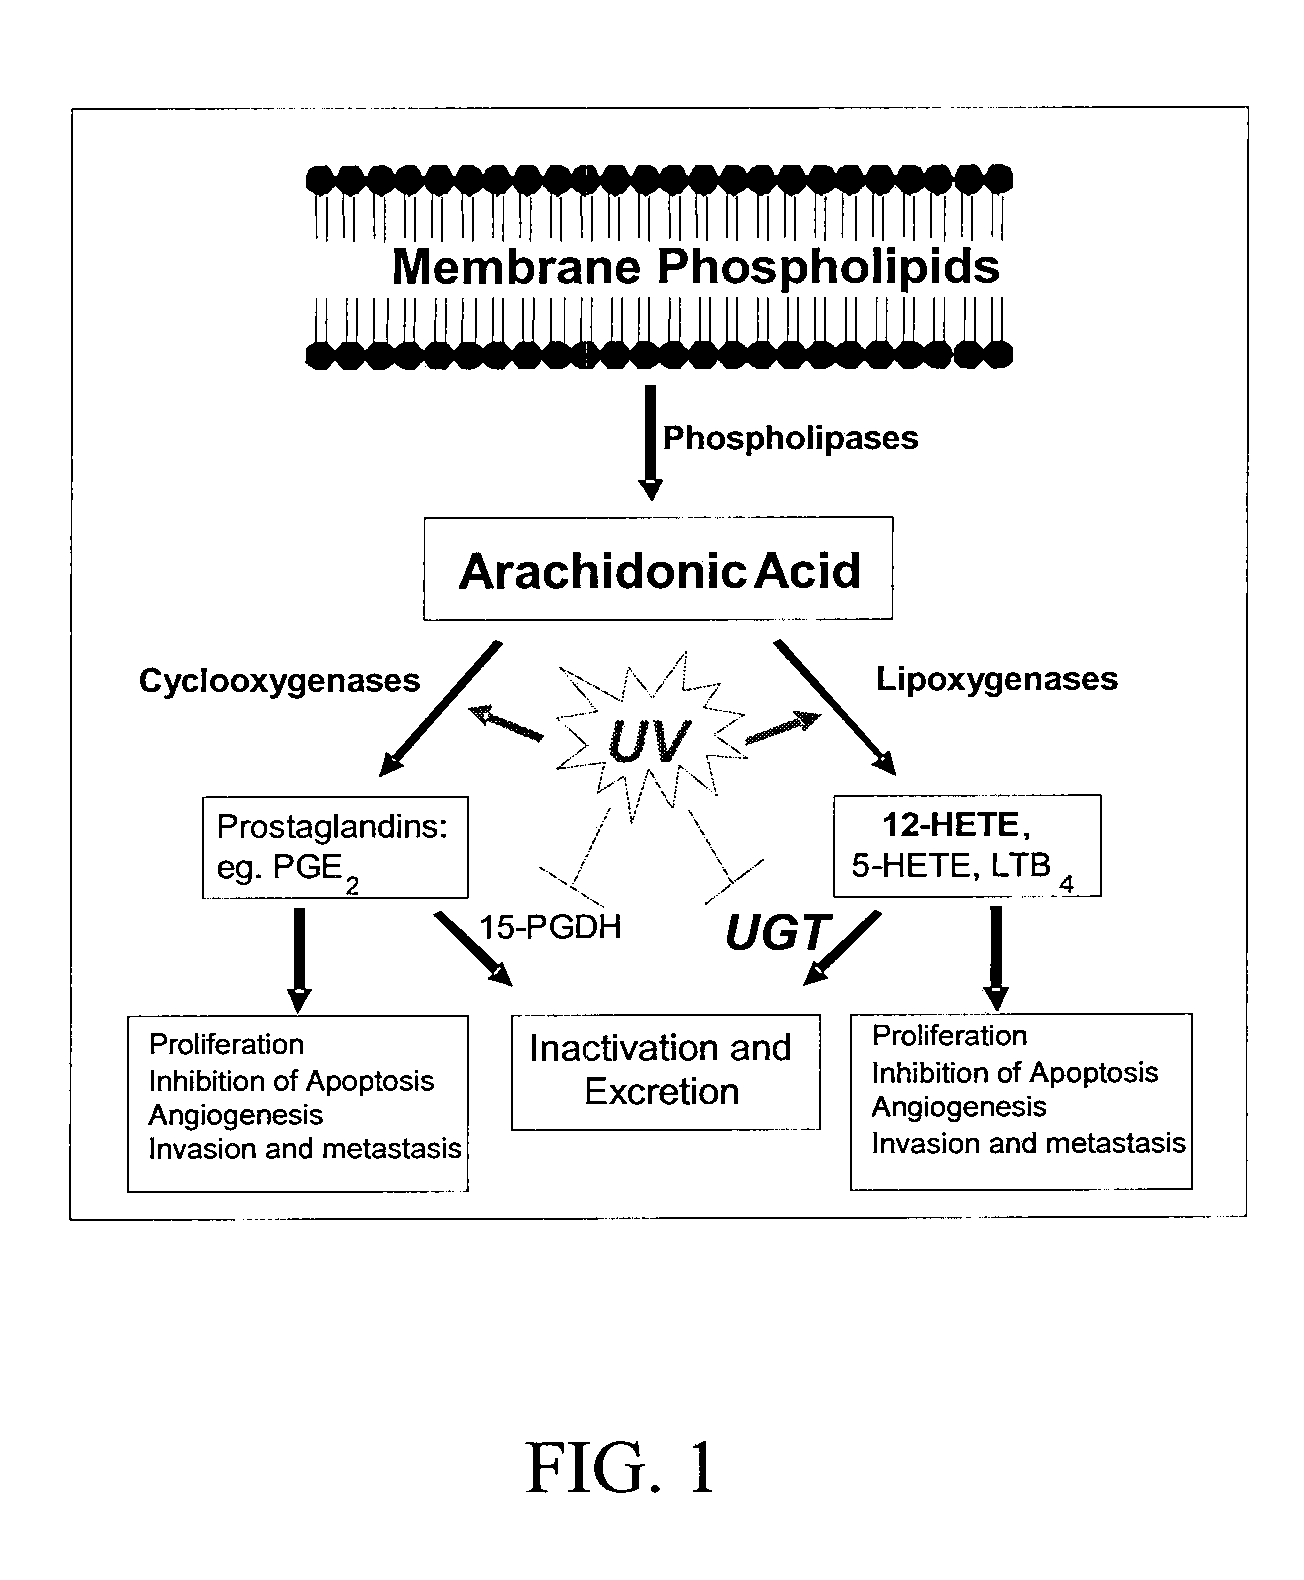 Method for inducing udp-glucuronosyltransferase activity using pterostilbene